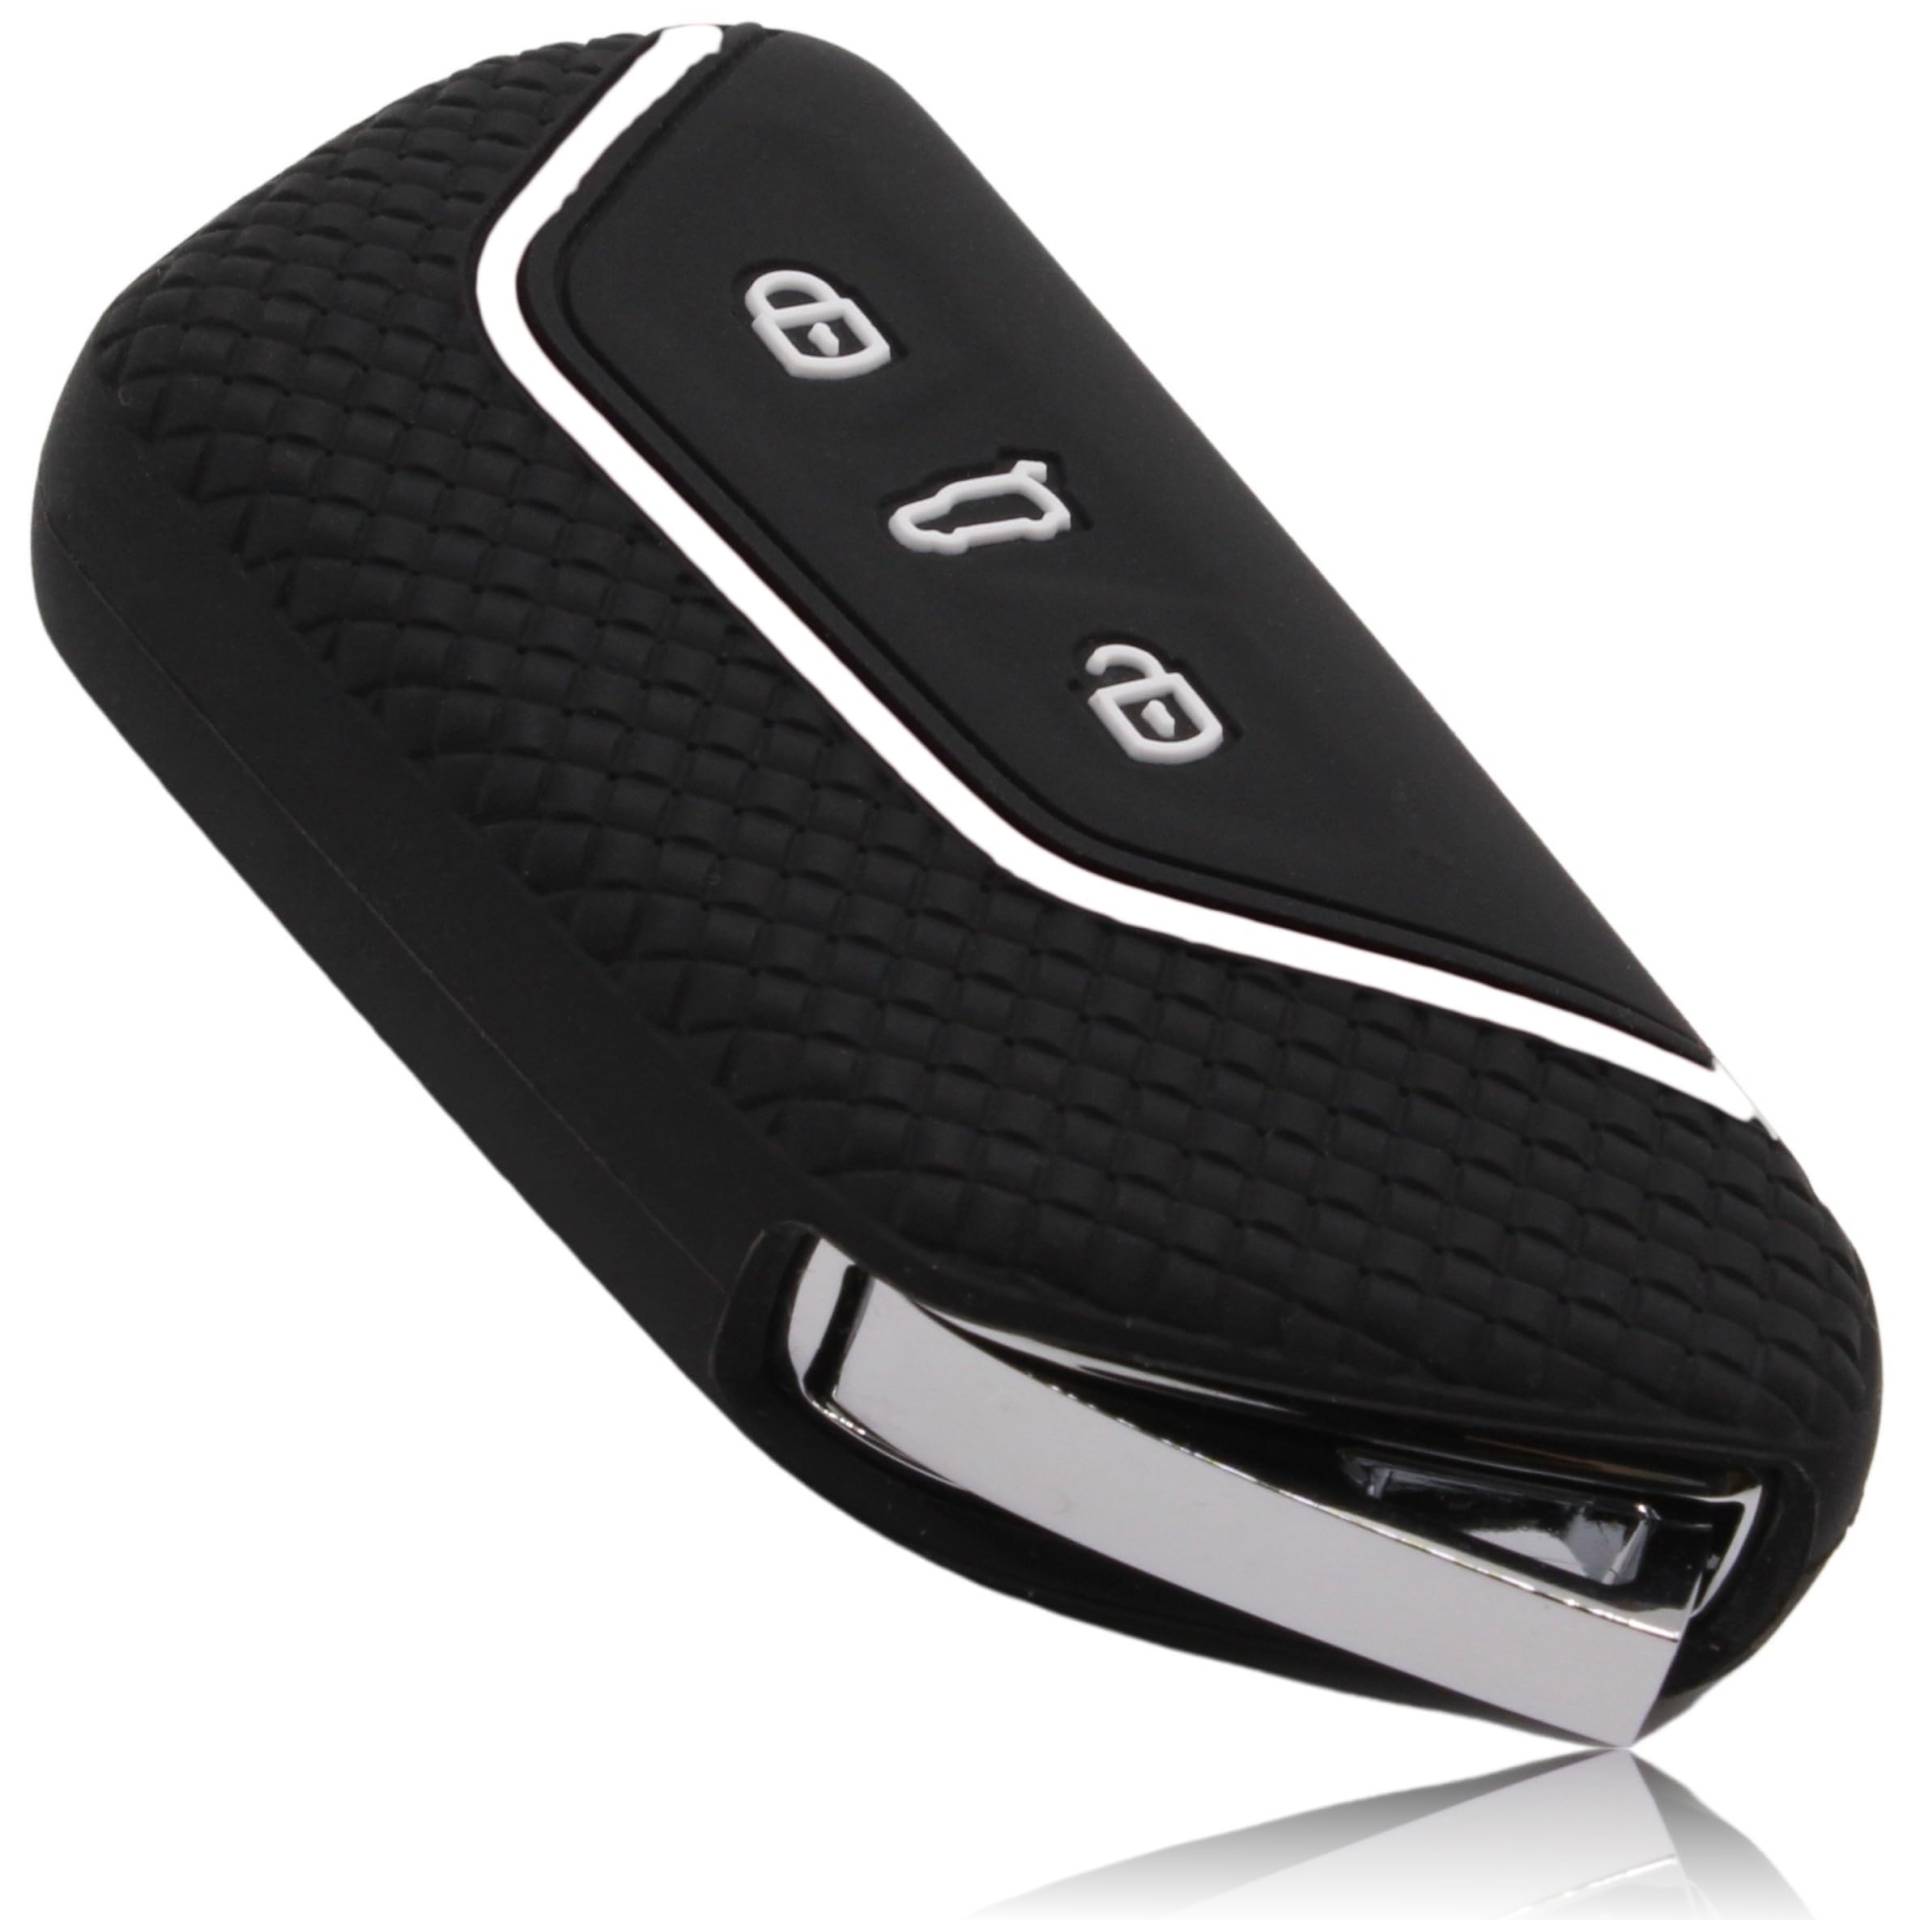 FOAMO Autoschlüssel Hülle Kompatibel mit VW, SEAT, SKODA, CUPRA Autoschlüssel - Silikon Schlüsselhülle - Schlüsselhülle - Schutz für Autoschlüssel in Schwarz Weiß von FOAMO